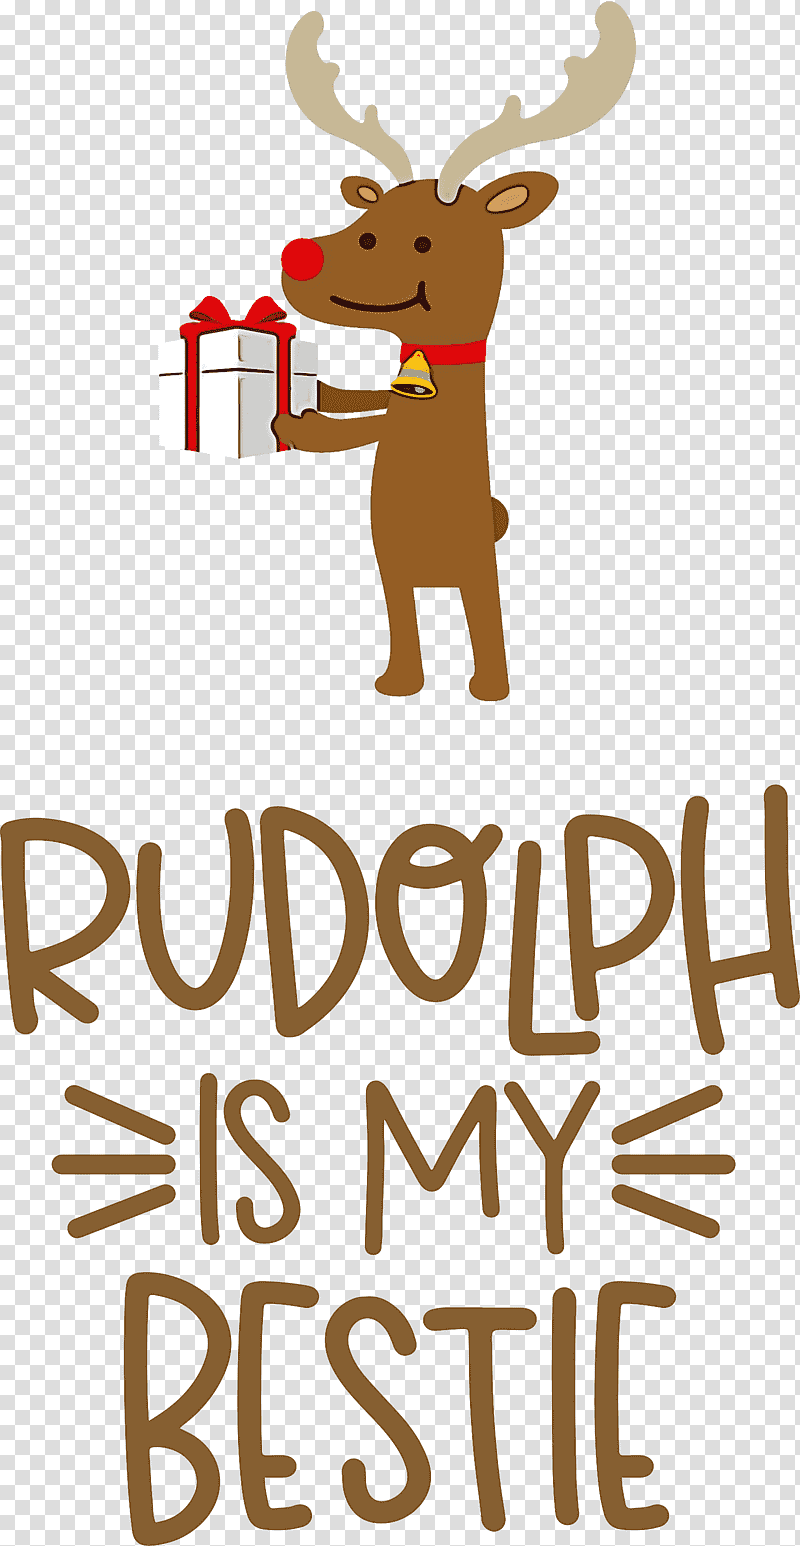 Rudolph is my bestie Rudolph Deer, Christmas , Reindeer, Logo, Cartoon, Character, Meter transparent background PNG clipart